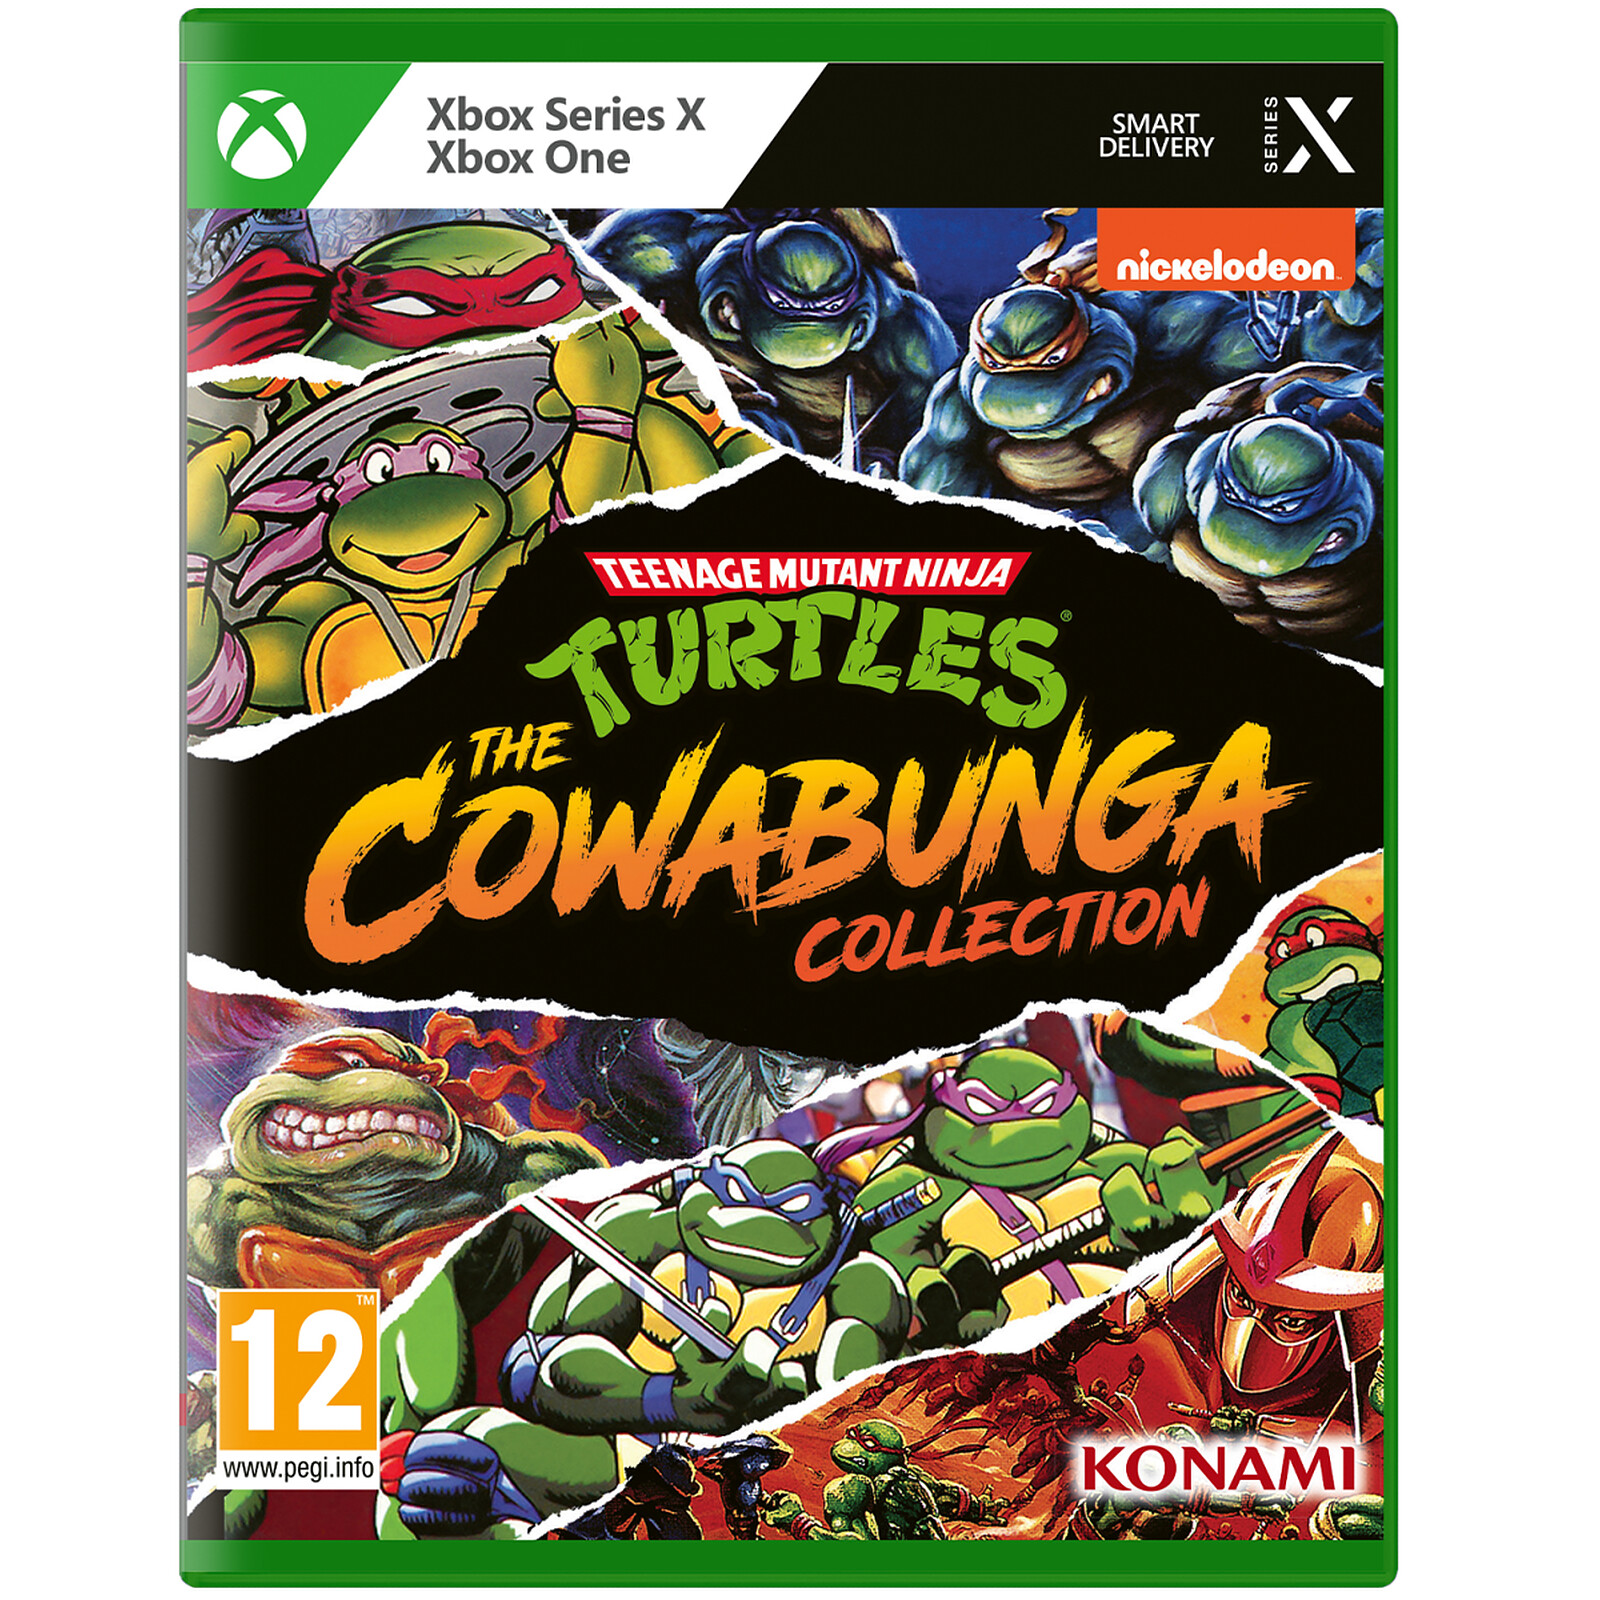 Черепашки ps4. Ninja Turtles Cowabunga collection ps4. Teenage Mutant Ninja Turtles: the Cowabunga collection. Teenage Mutant Ninja Turtles: the Cowabunga collection ps4. TMNT Cowabunga collection ps4.